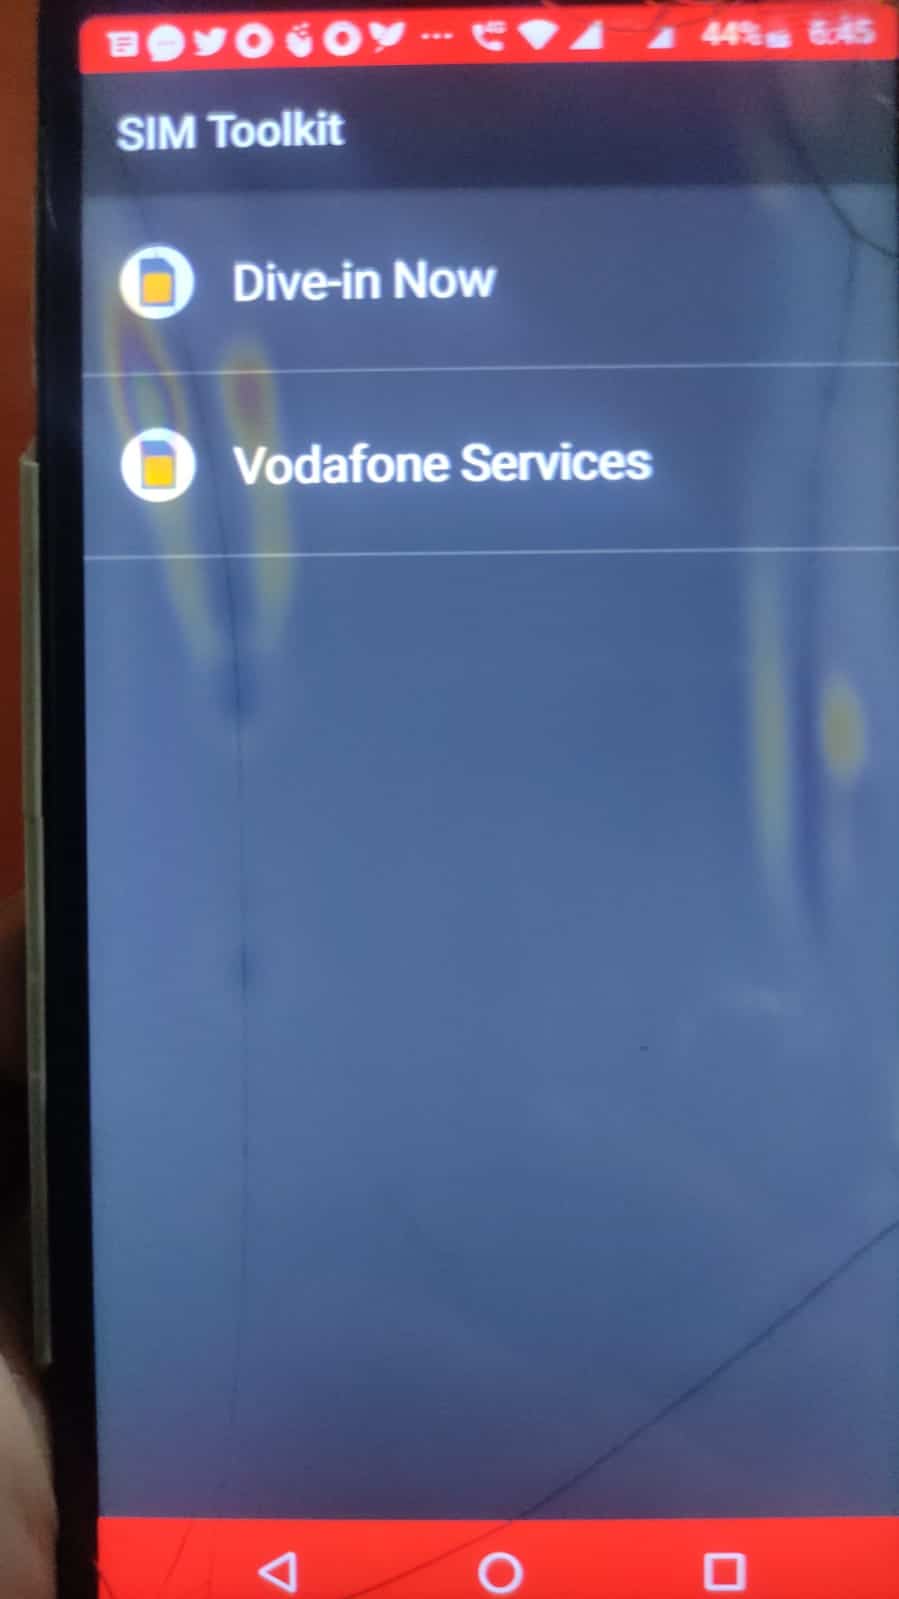 Vodafone SIM Toolkit options